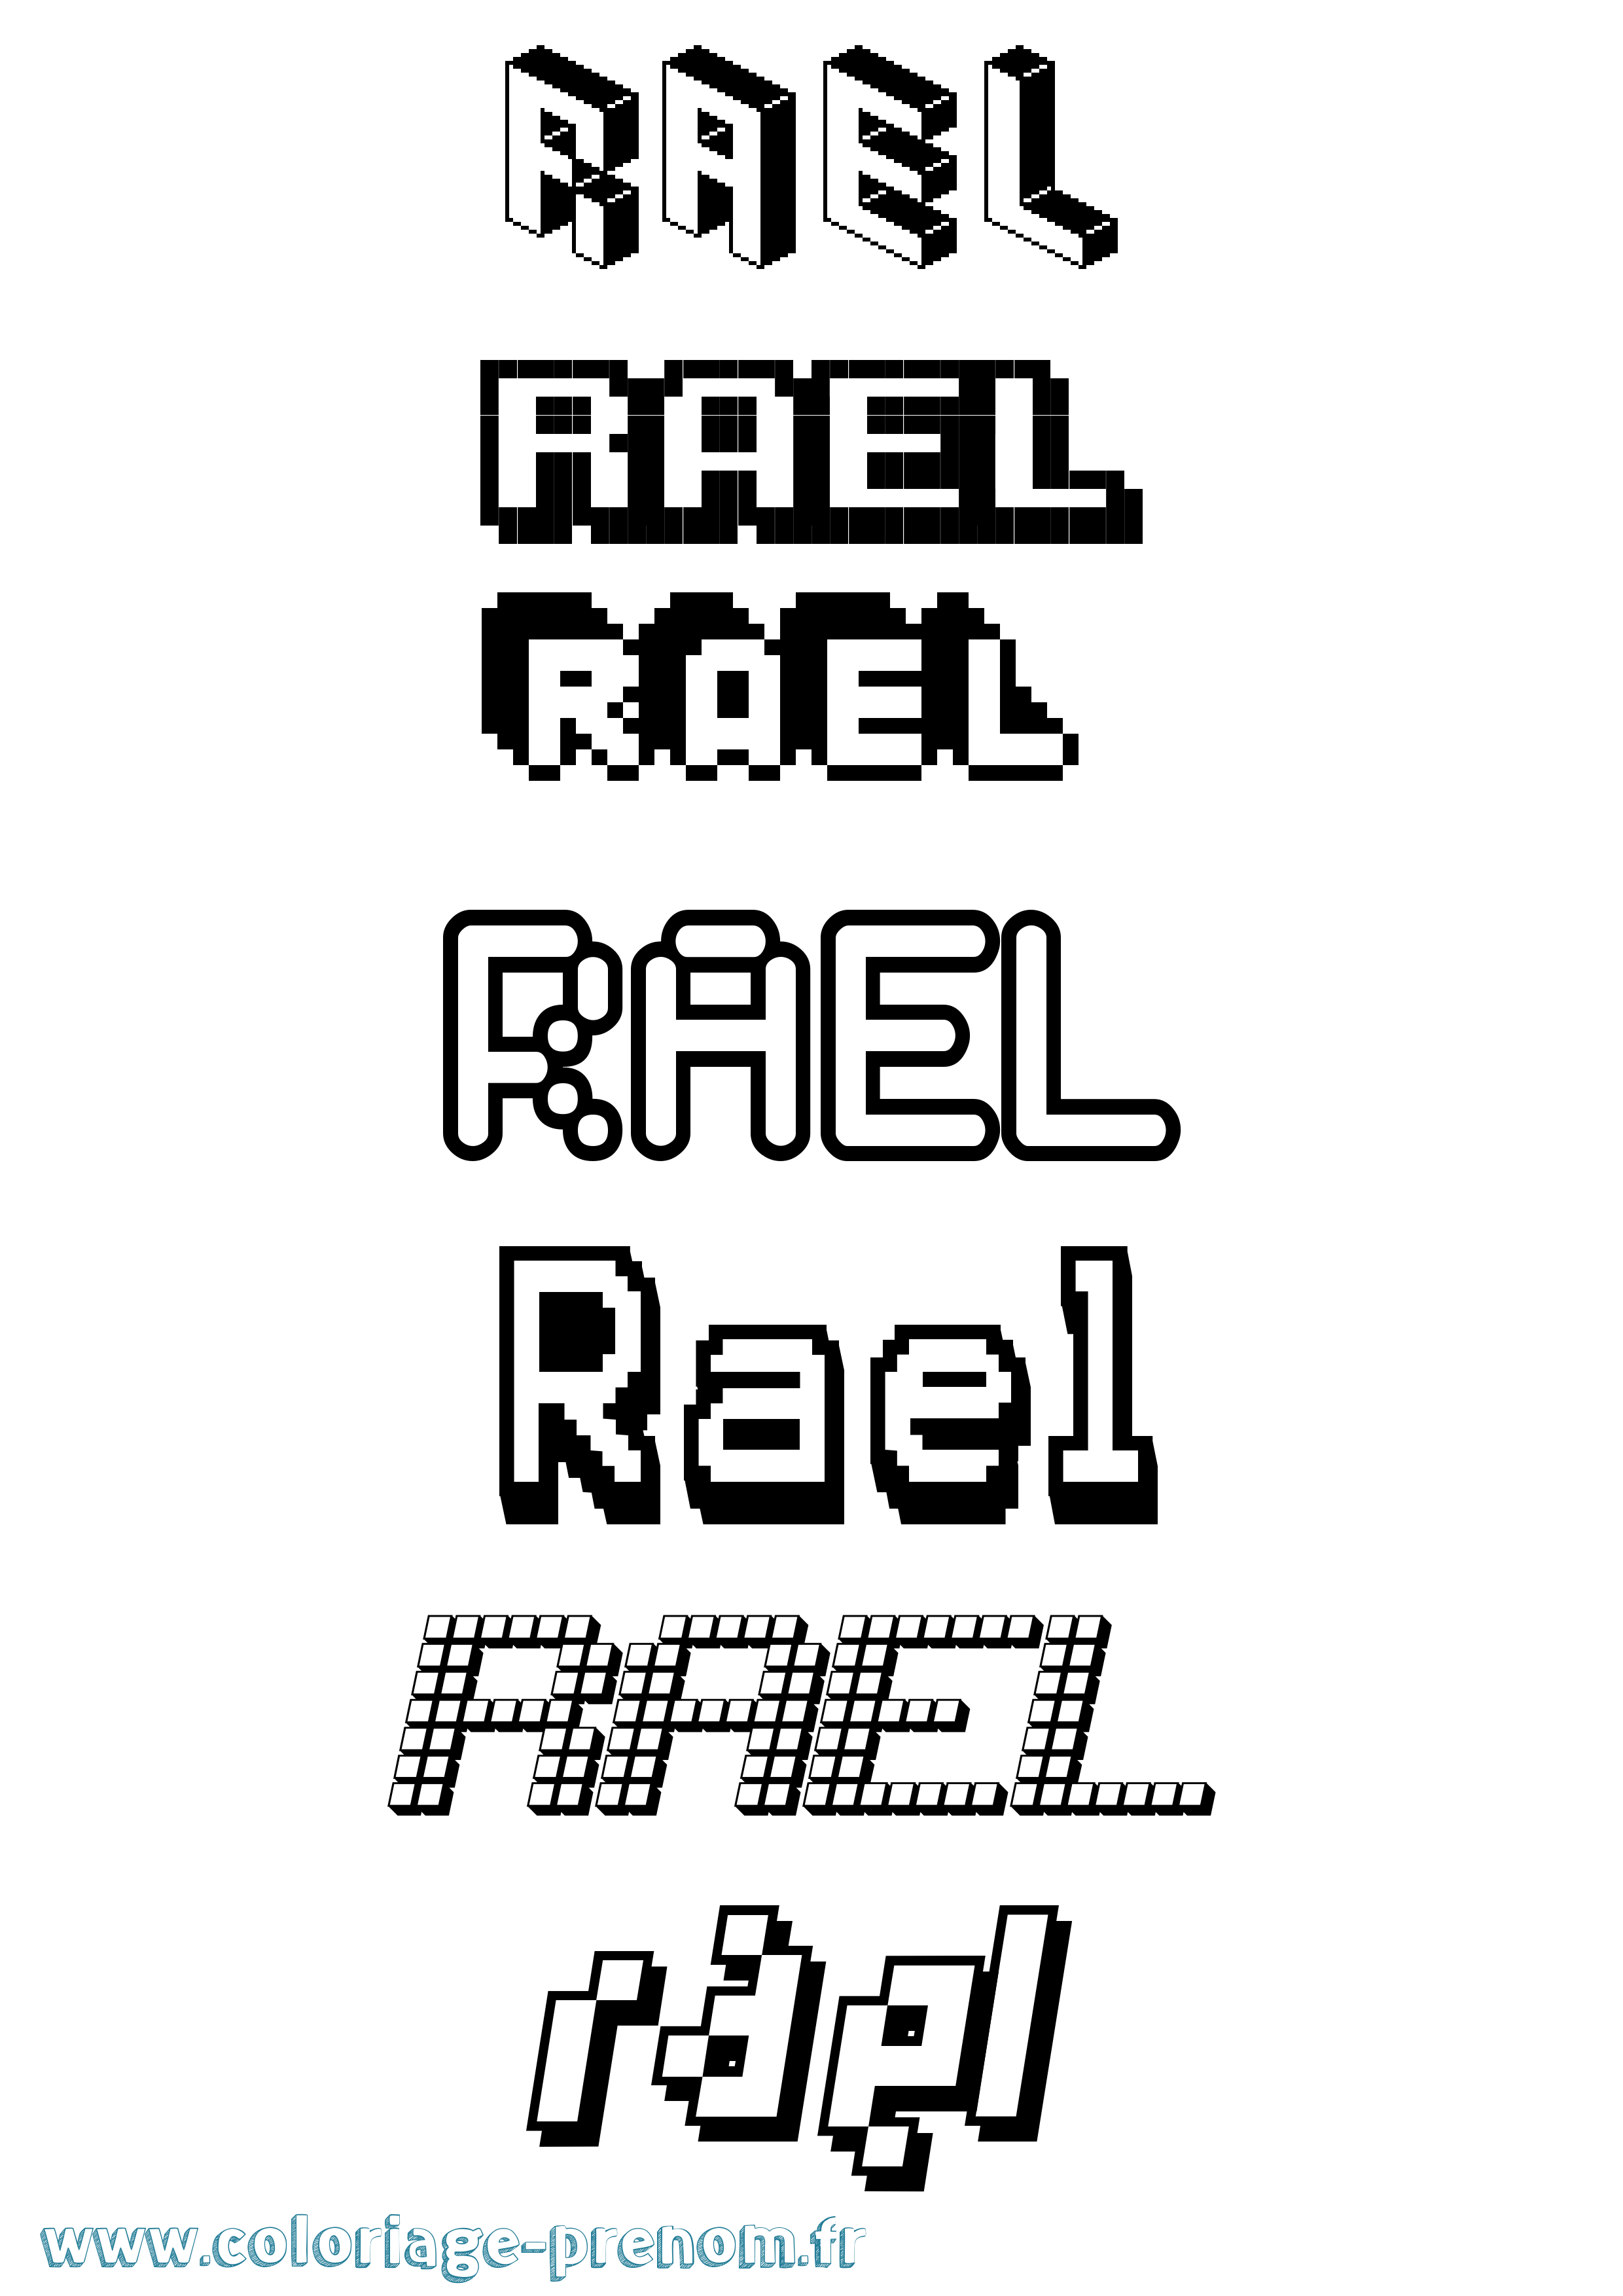 Coloriage prénom Rael Pixel